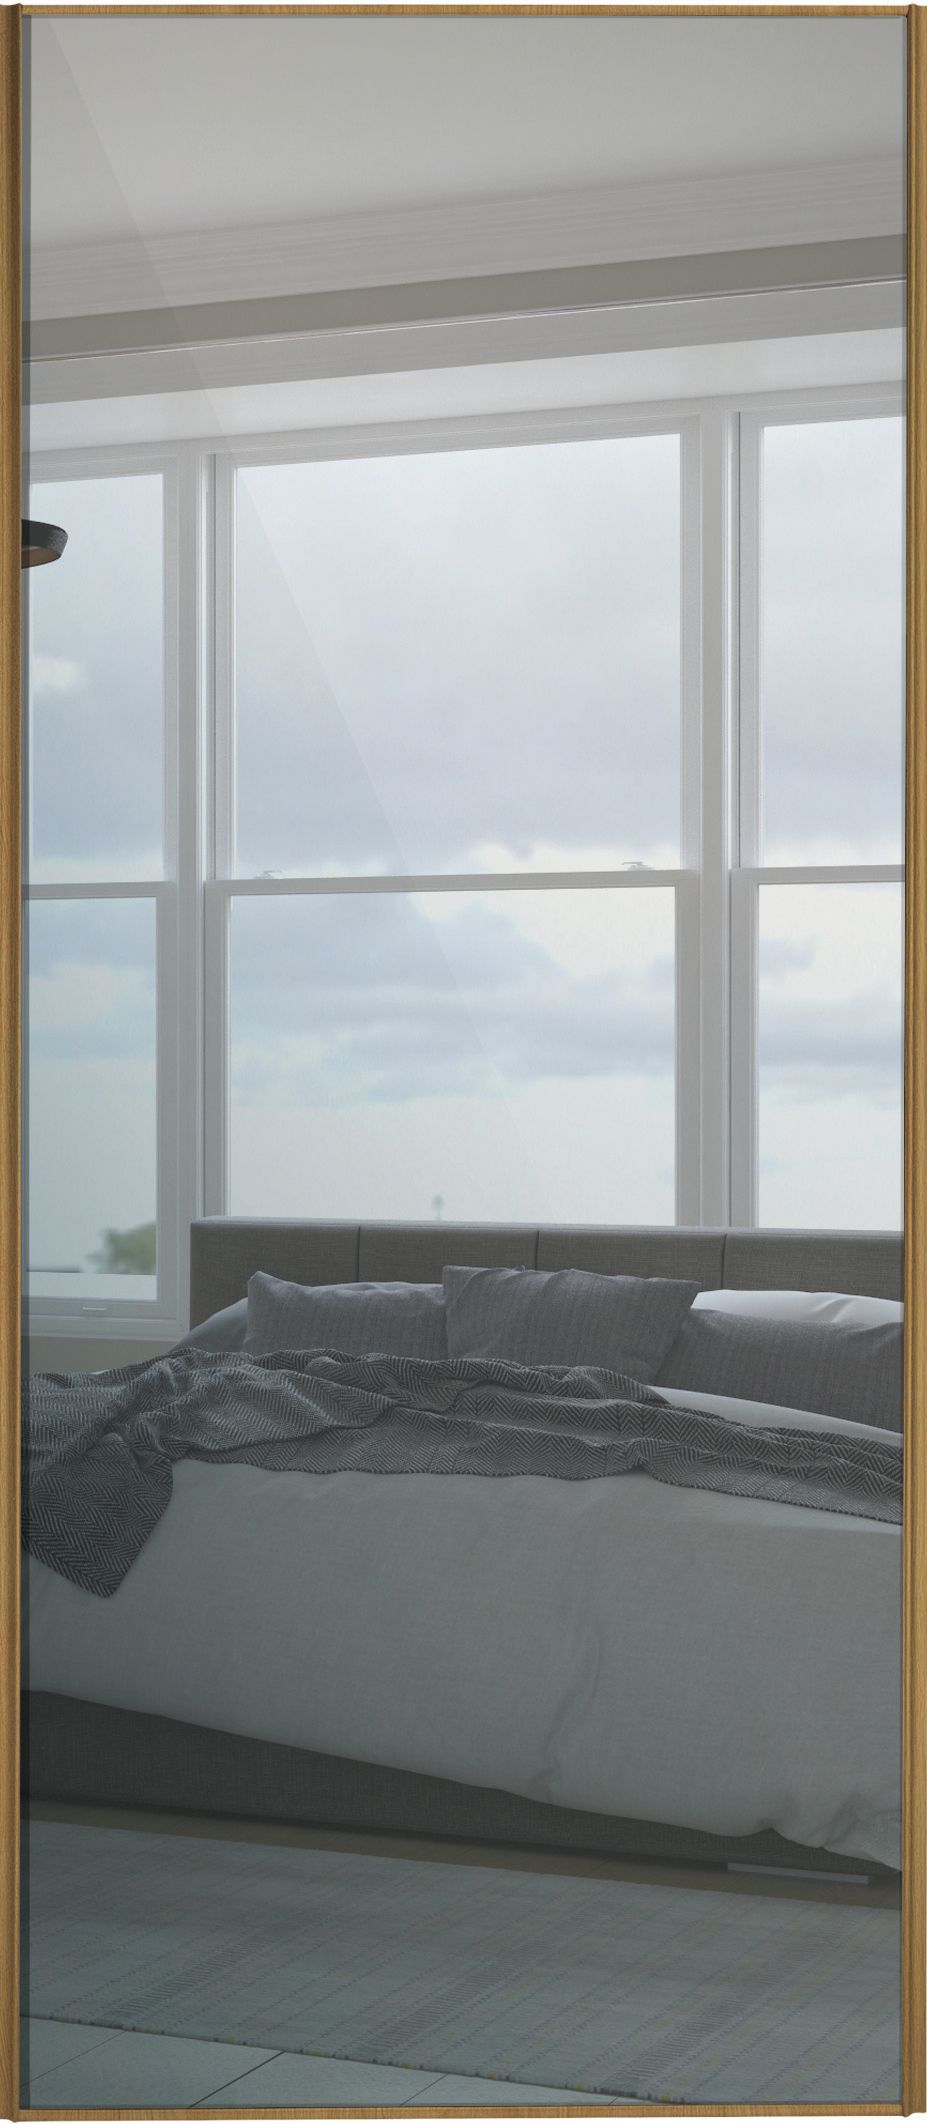 Image of Spacepro Sliding Wardrobe Door Oak Frame Mirror - 2220 x 914mm